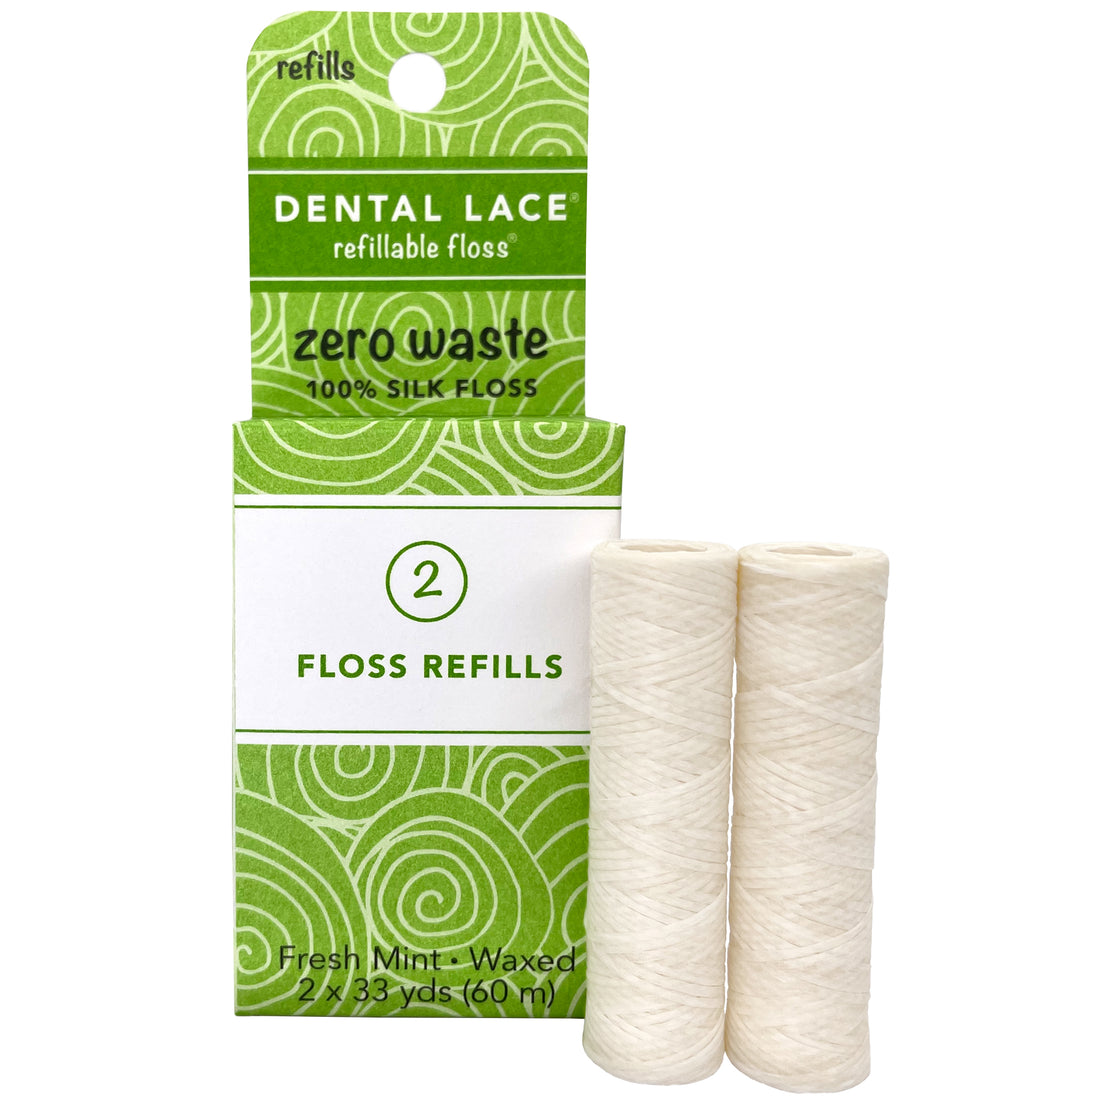 Zero Waste Refillable Silk Floss Bundle - 8 Month Supply